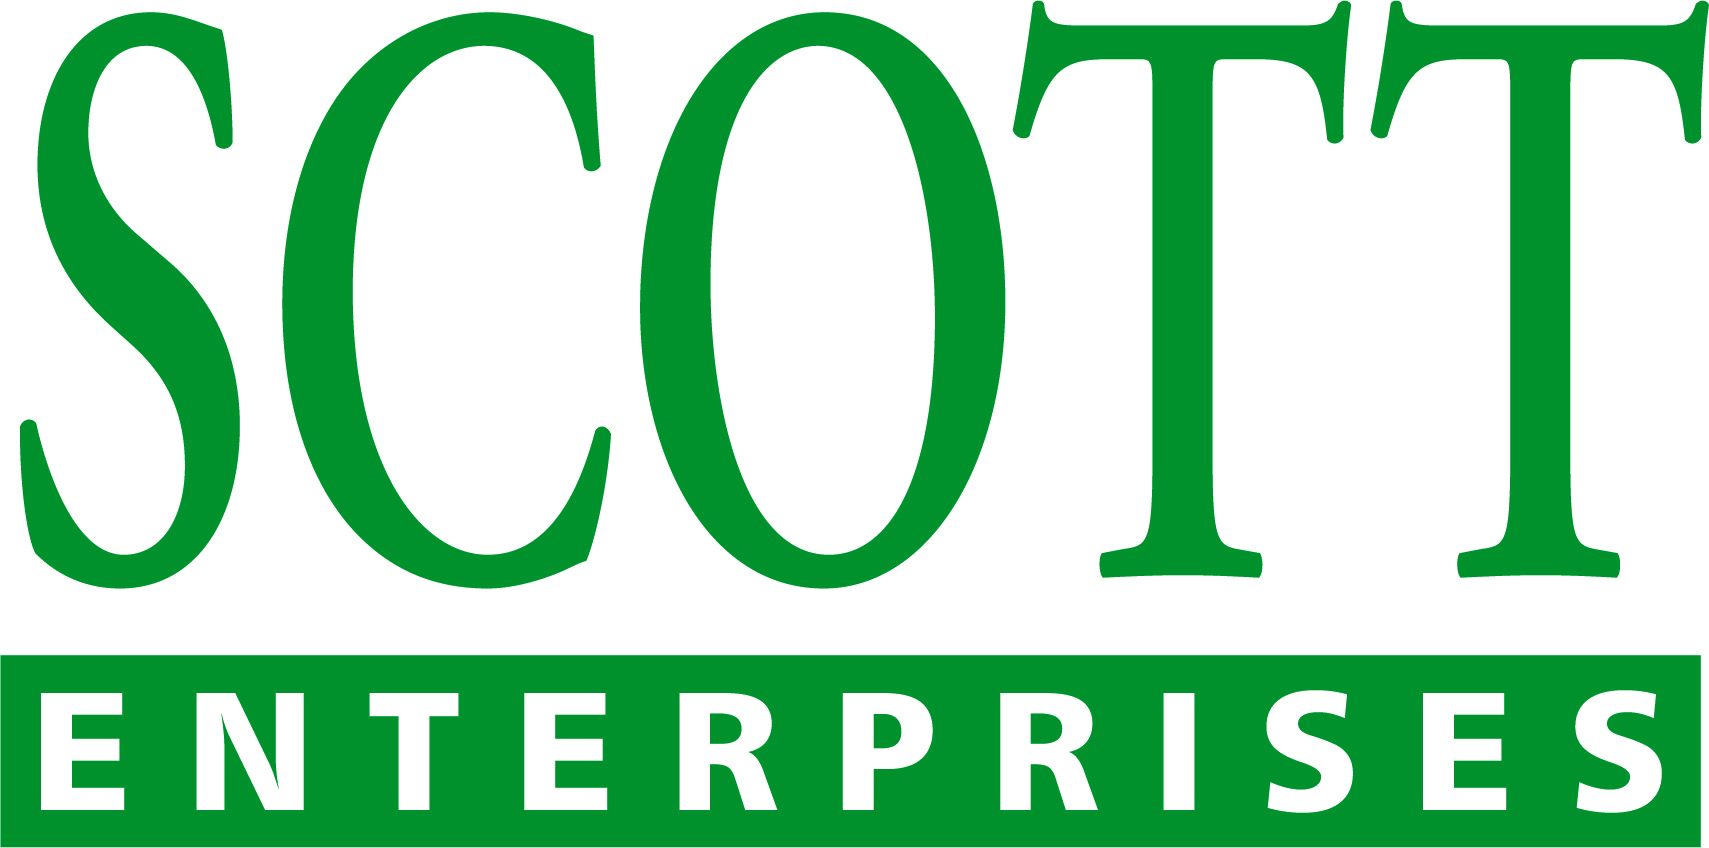 5. Scott Enterprises